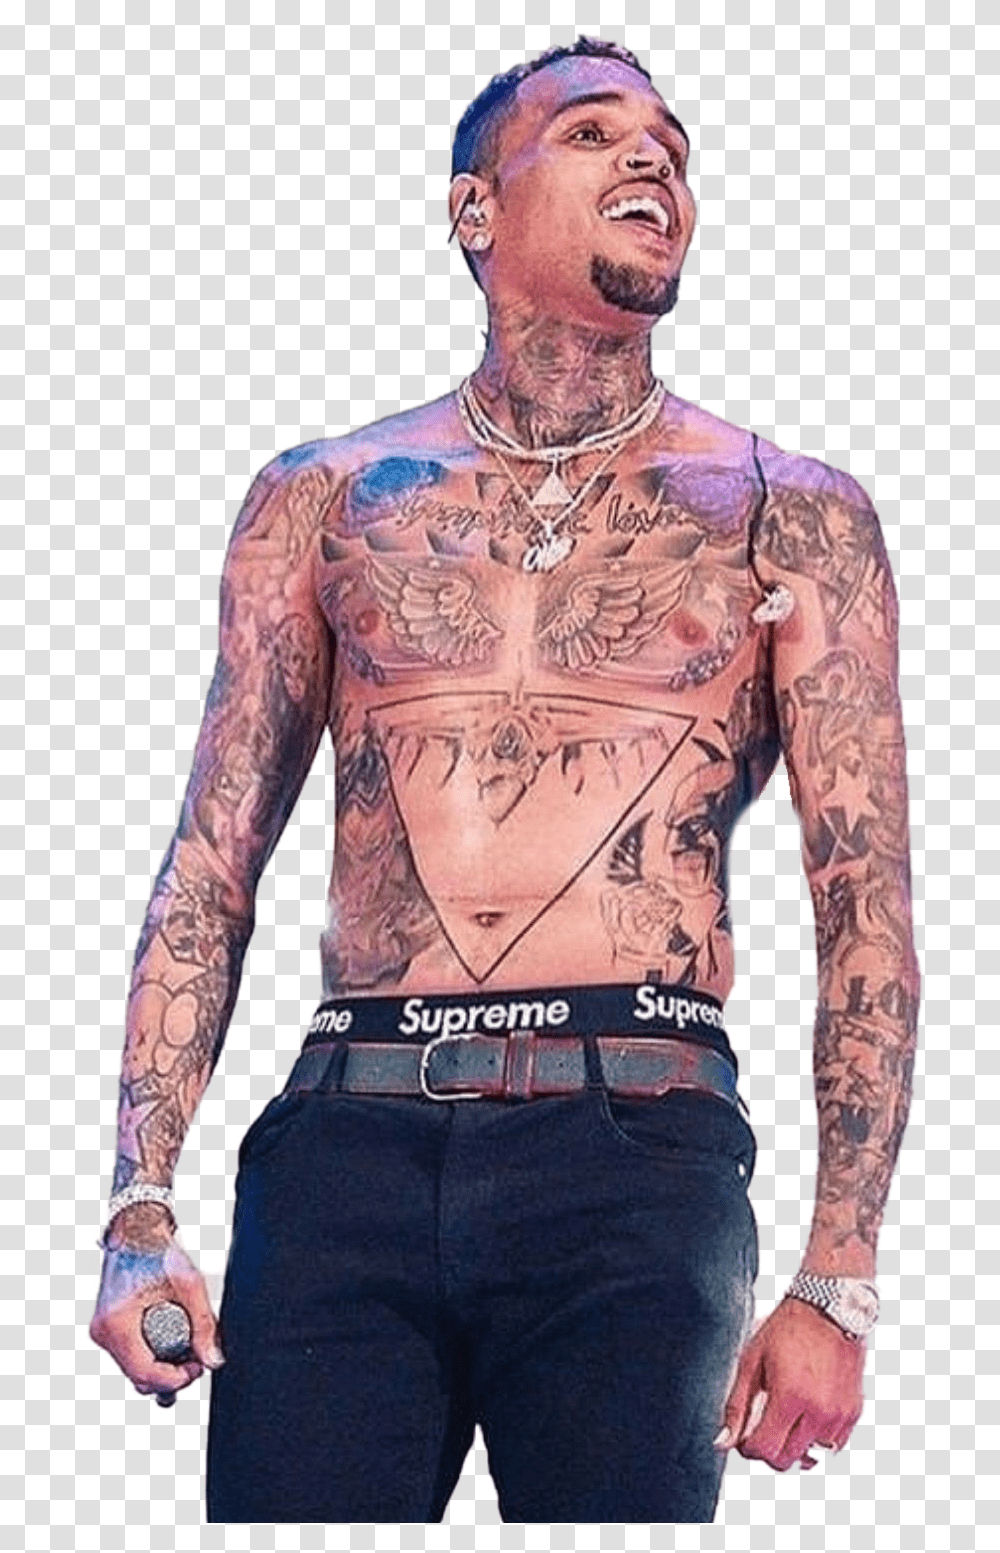 Chris Brown Image Chris Brown Background, Skin, Person, Human, Tattoo Transparent Png